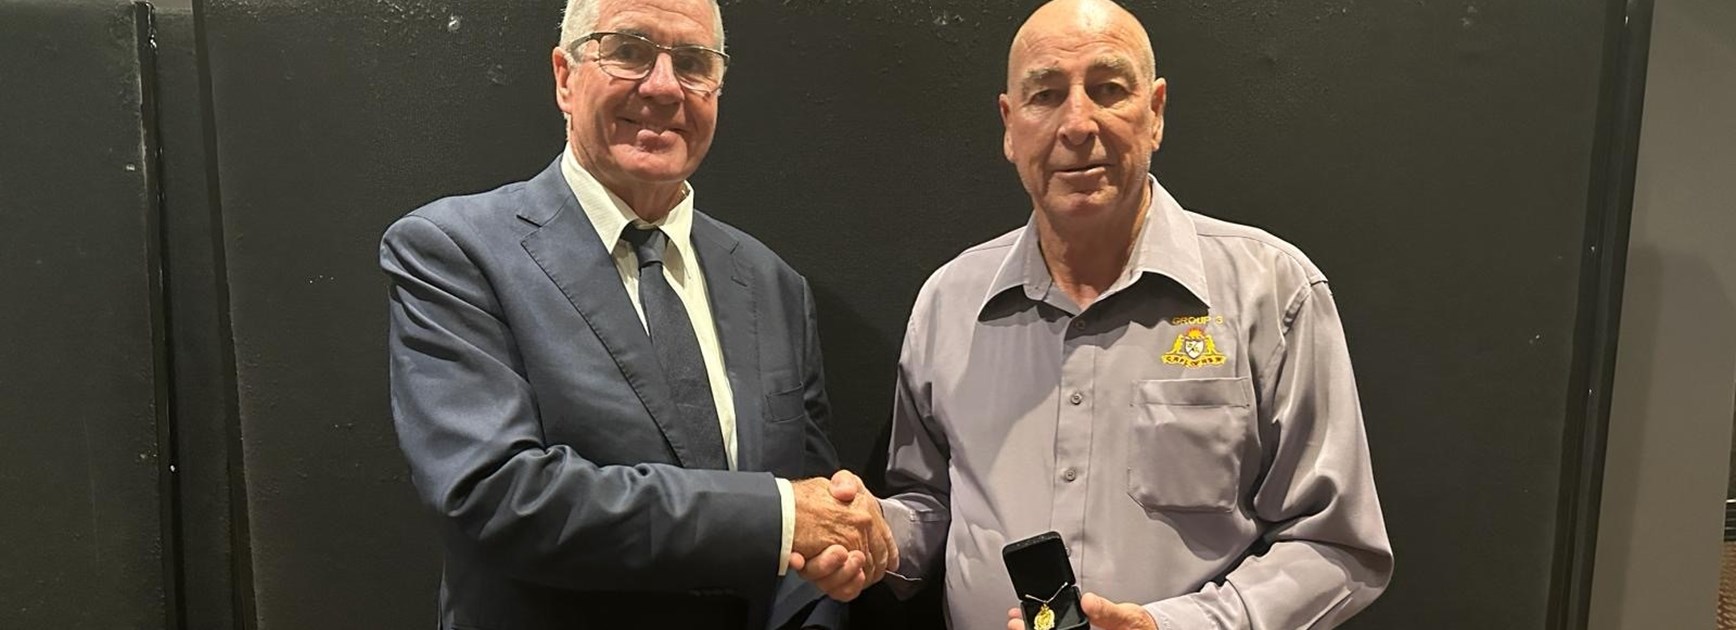 Brady & Bridge awarded NSWRL Life Membership